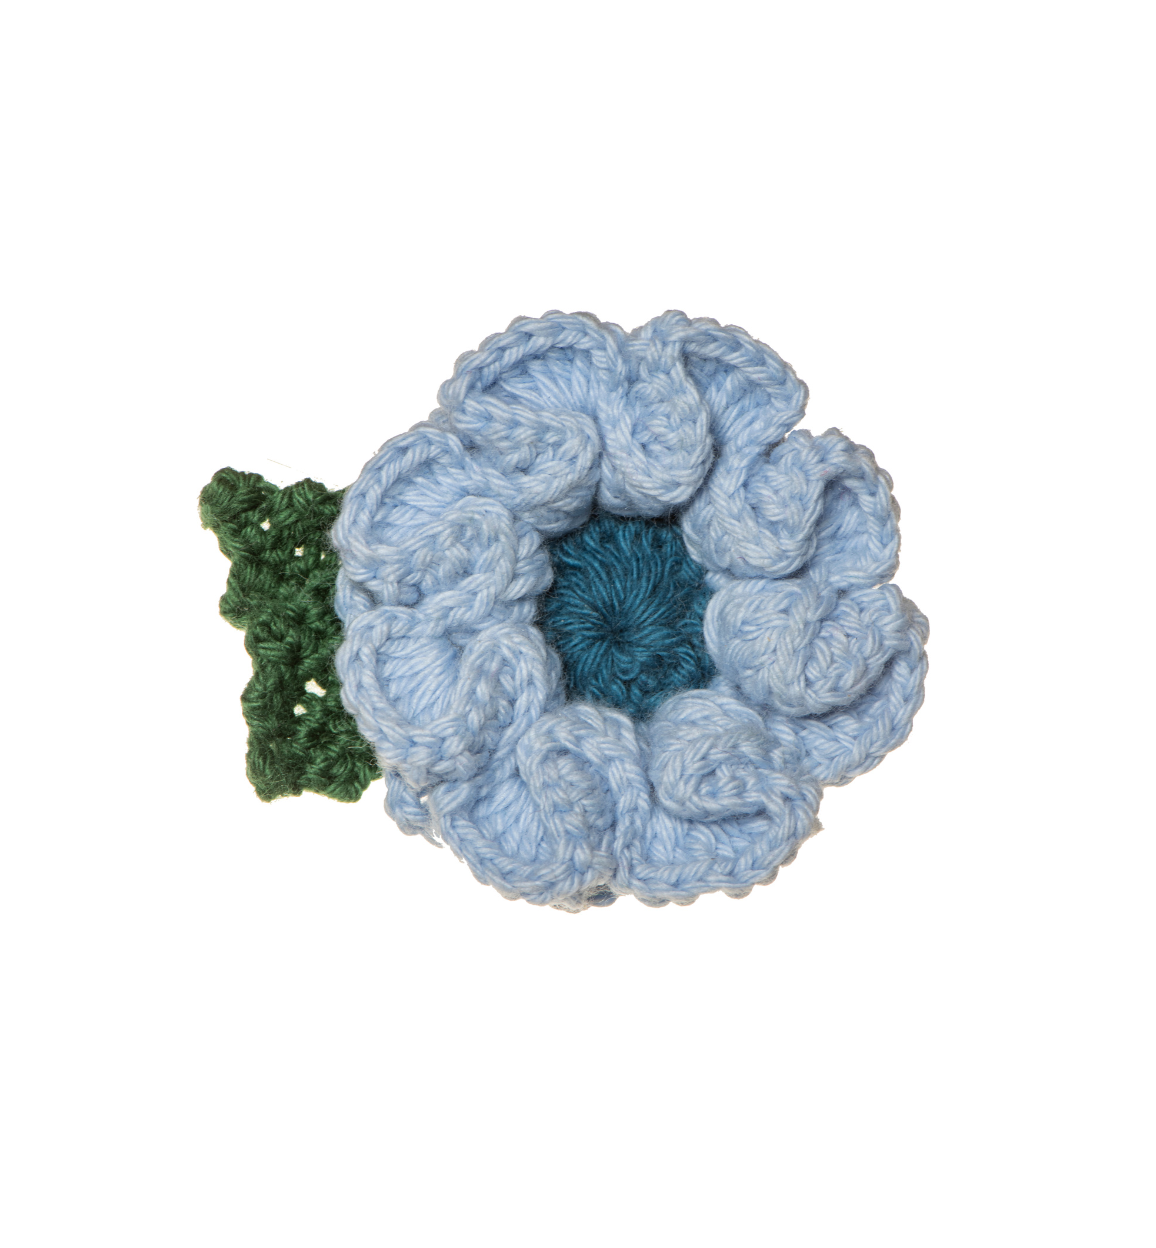 Crochet Camellia Flower Brooch